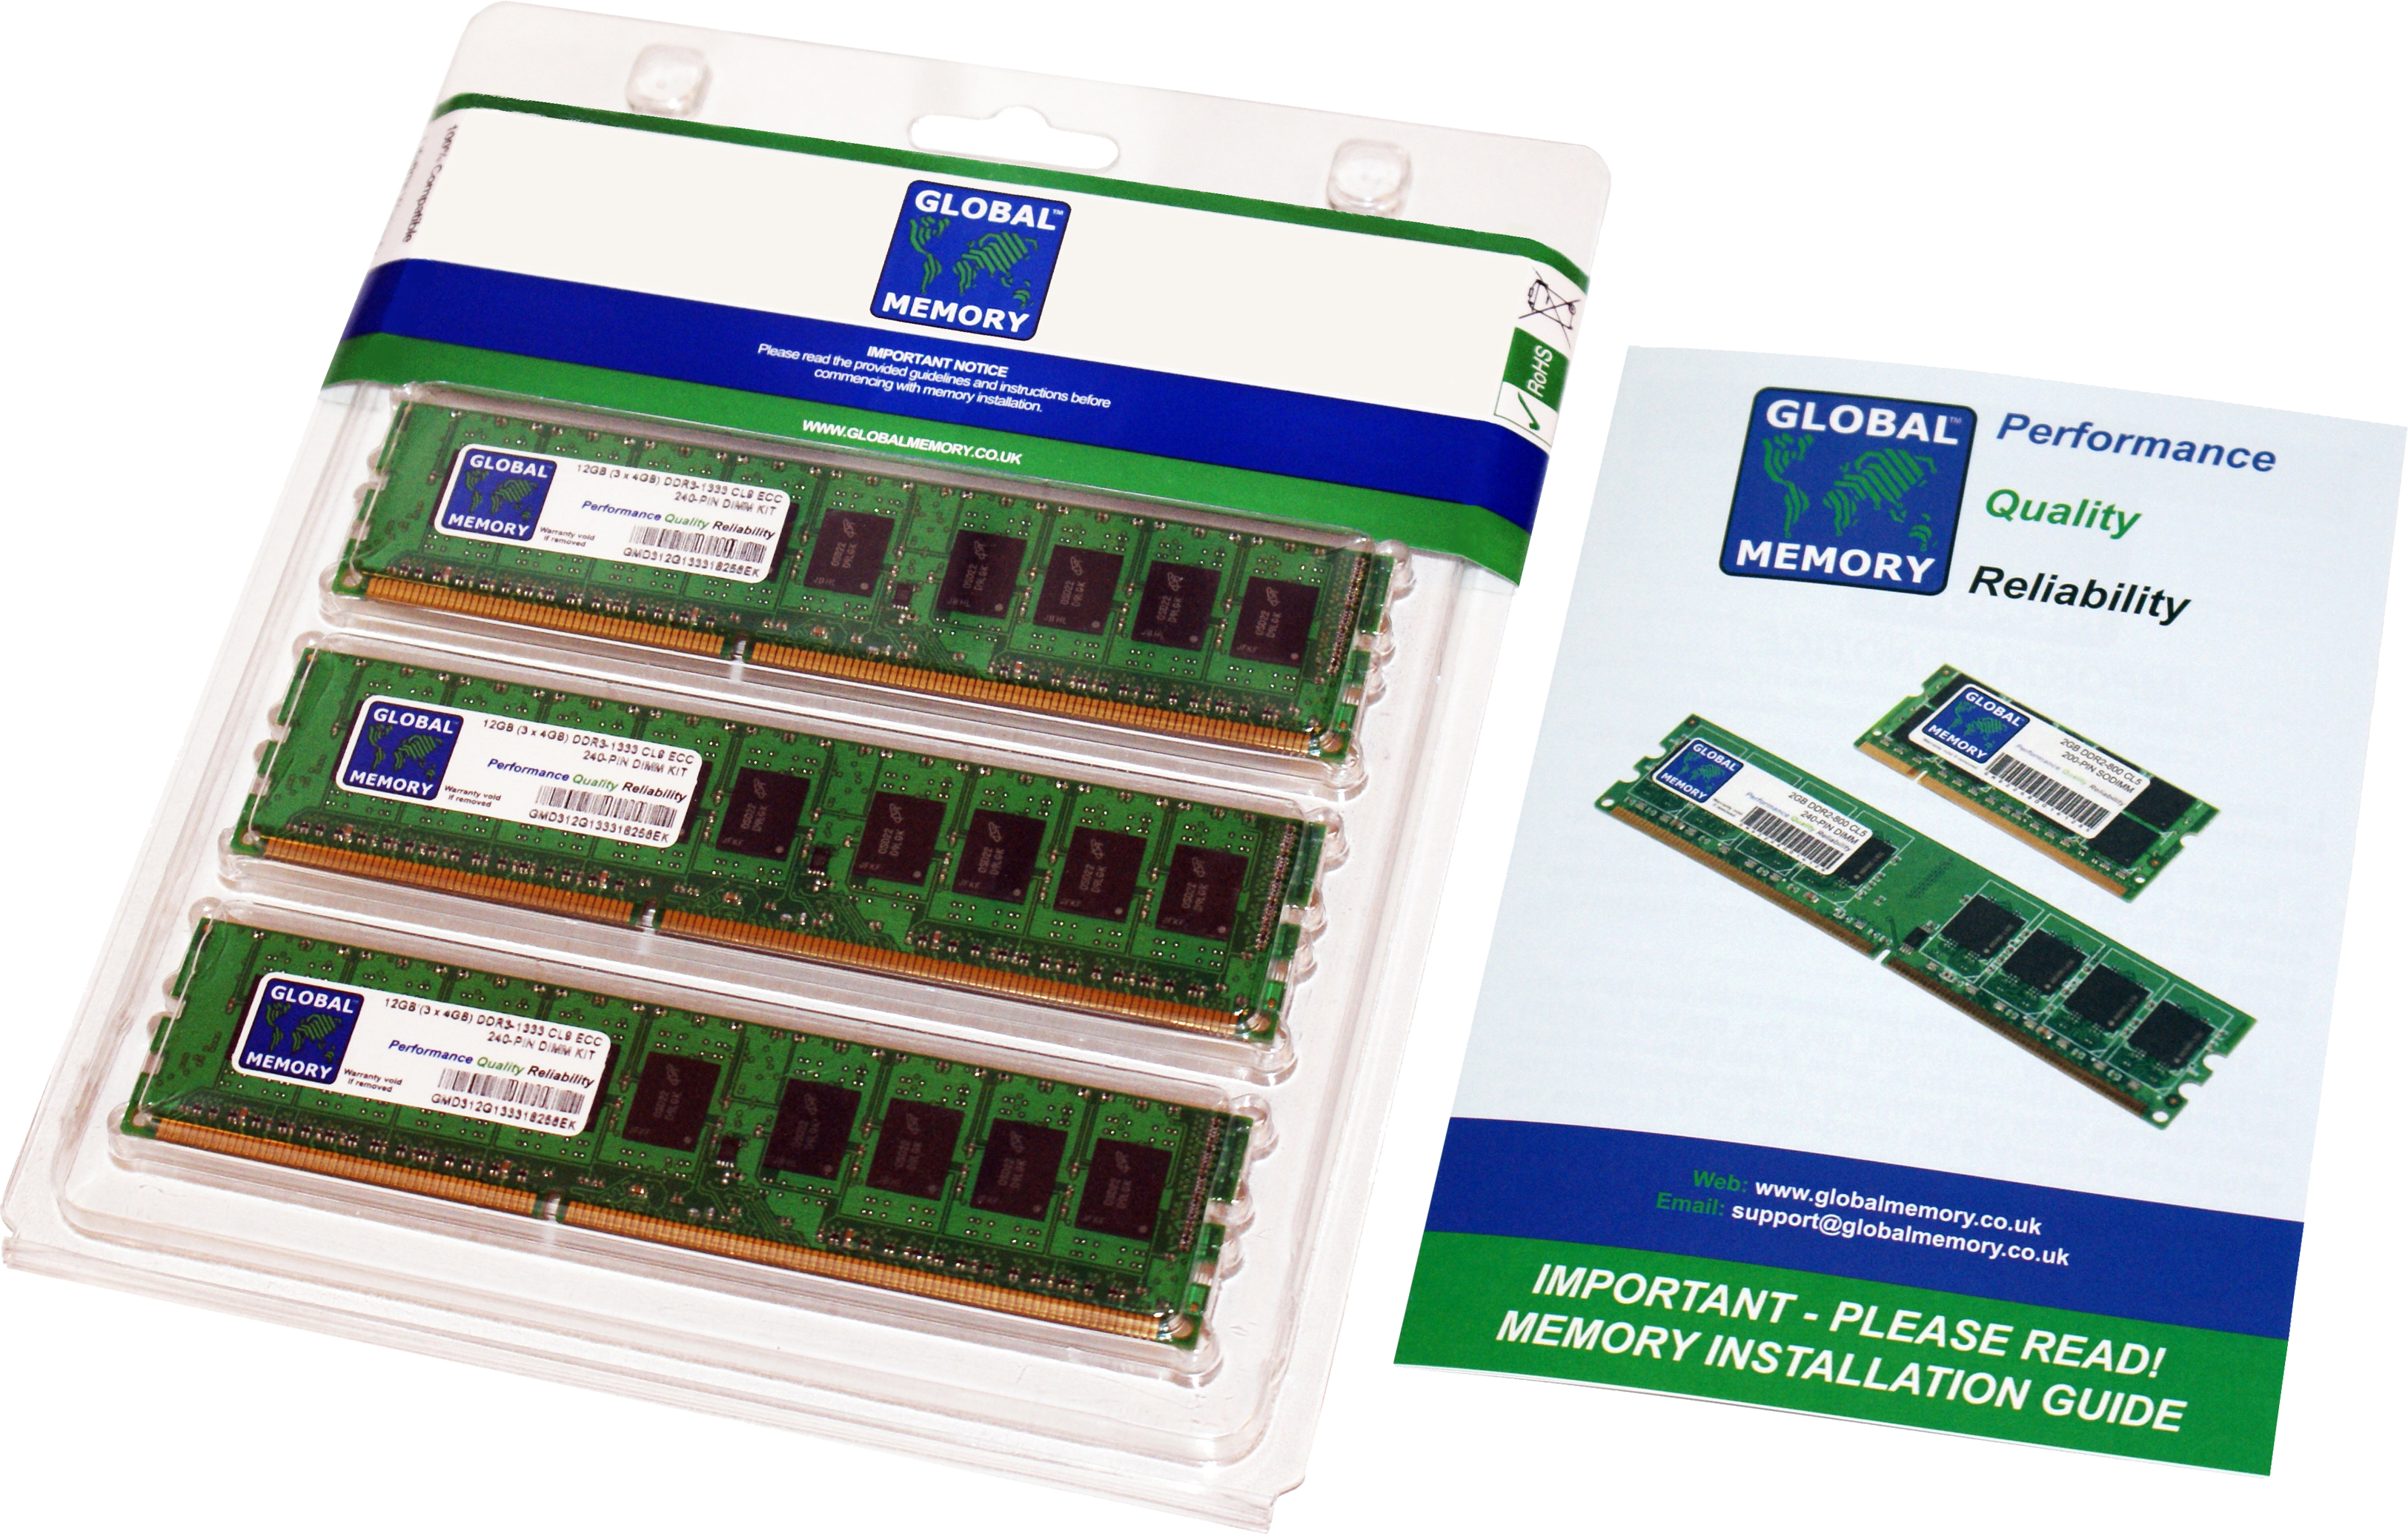 6GB (3 x 2GB) DDR3 1600MHz PC3-12800 240-PIN ECC DIMM (UDIMM) MEMORY RAM KIT FOR SERVERS/WORKSTATIONS